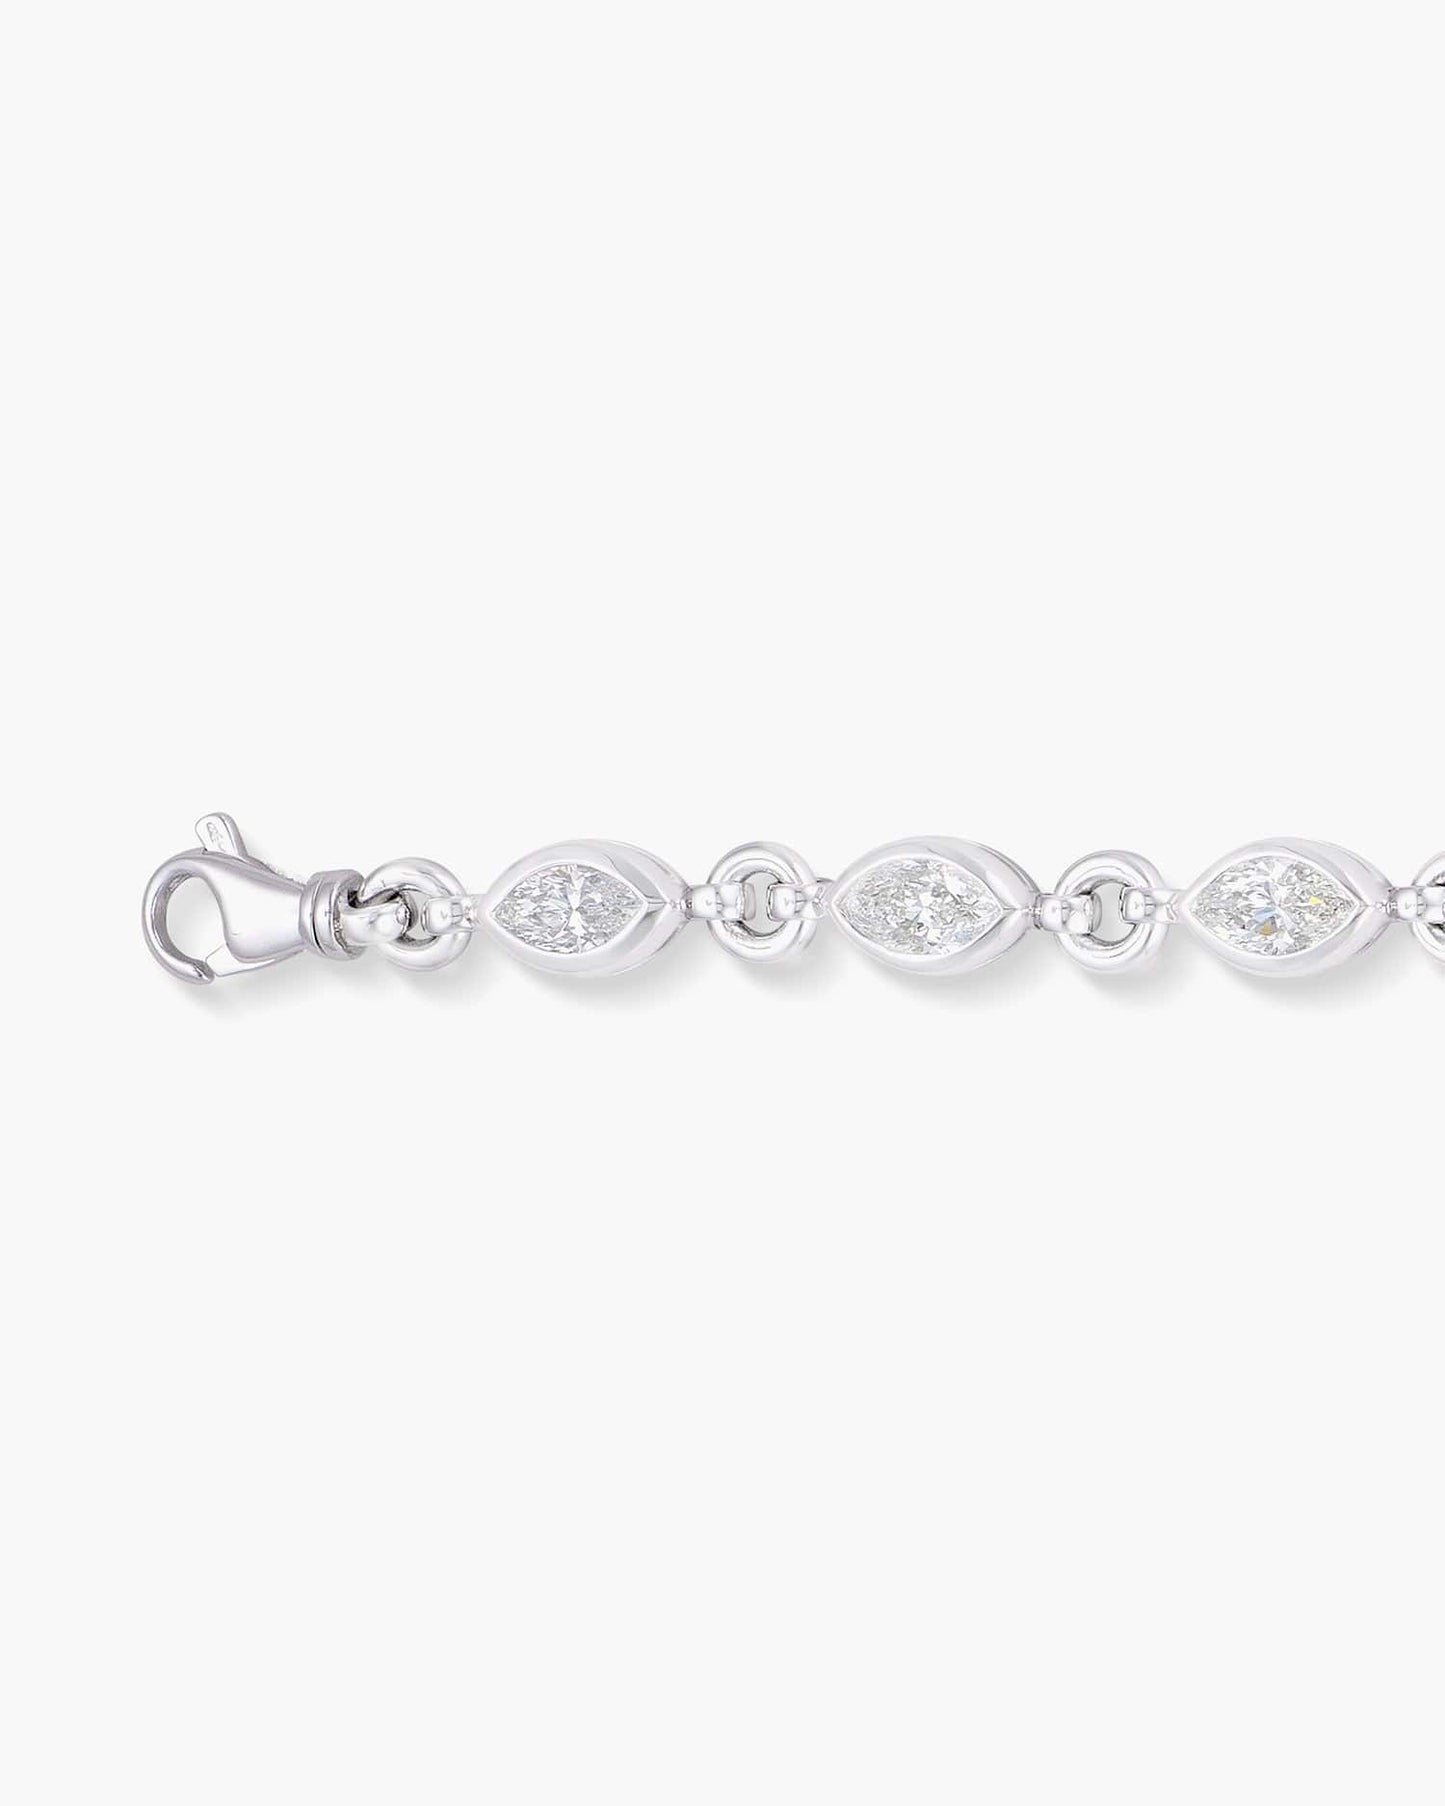 Marquise Shape Diamond Bracelet (0.58 carat)